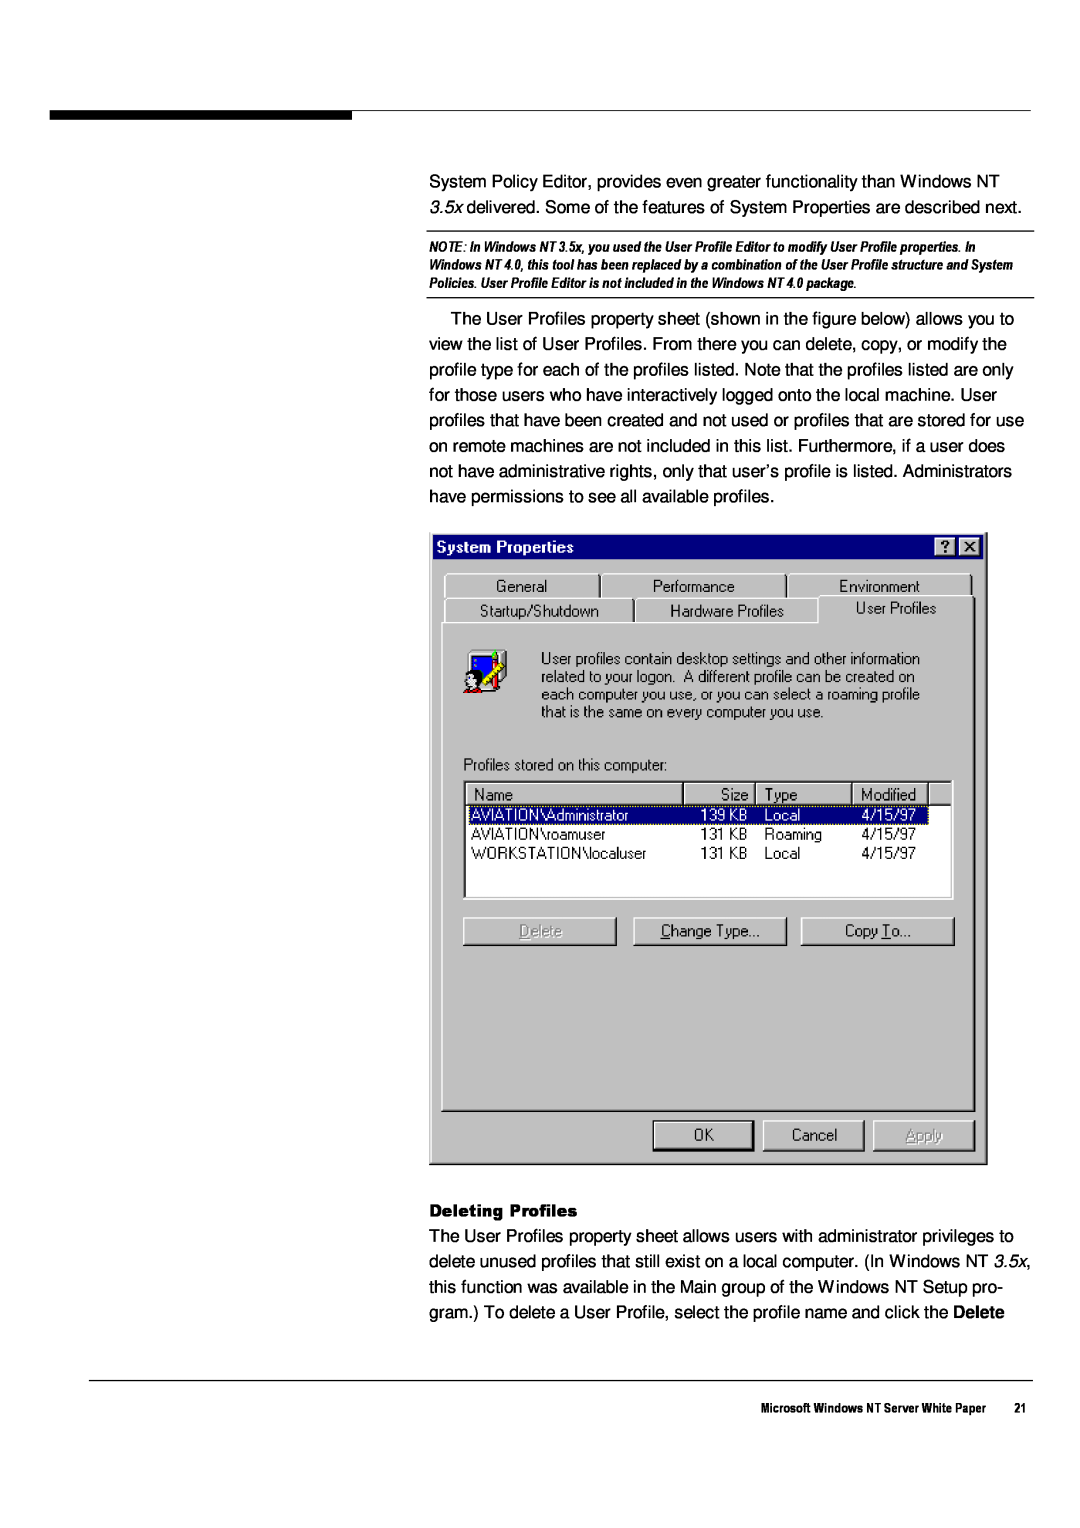 Microsoft Windows NT 4.0 manual Deleting Profiles 